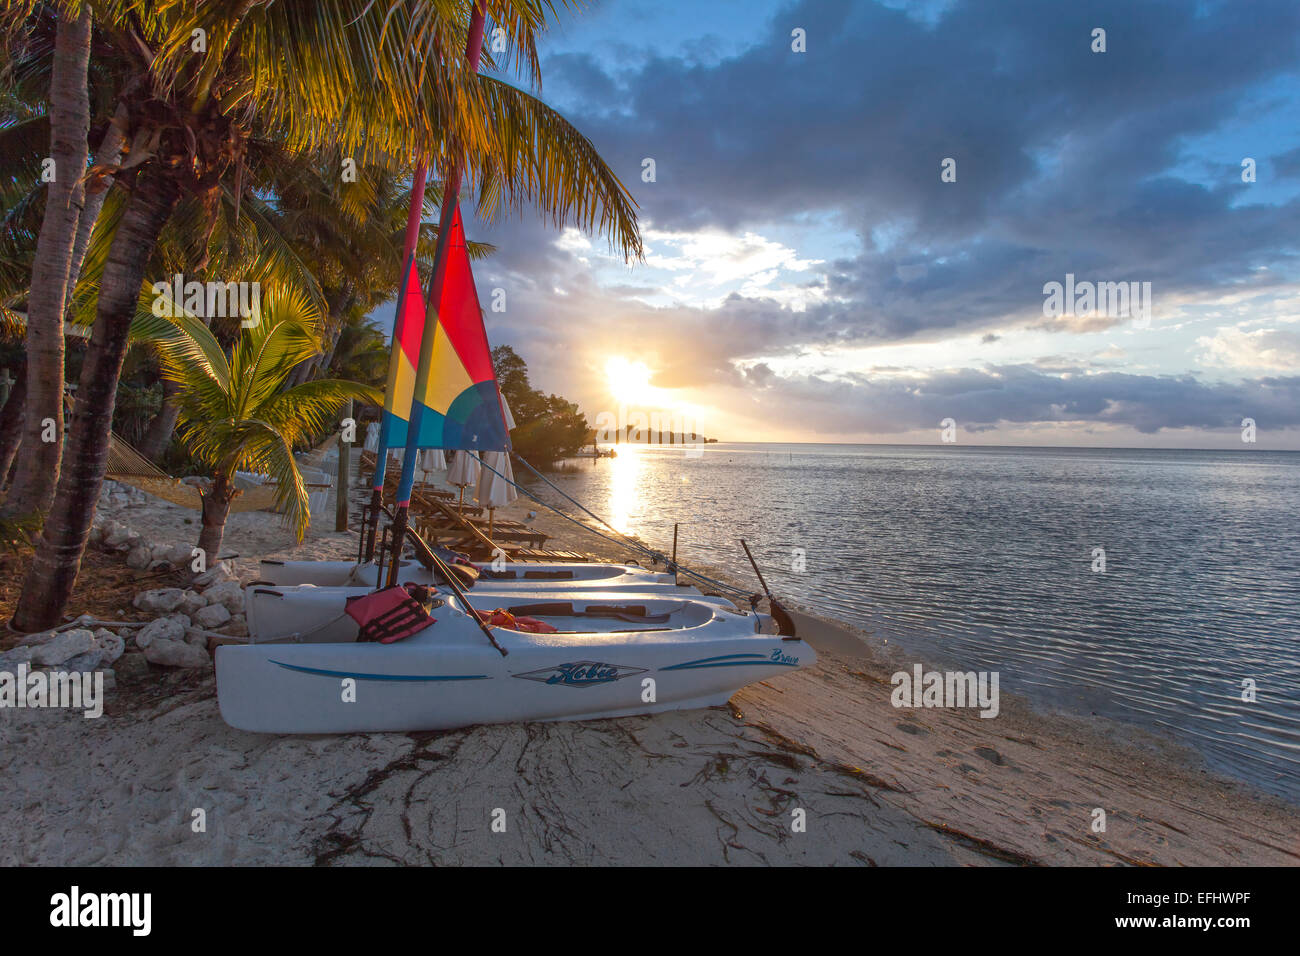 Impression at Little Palm Island Resort, Florida Keys, USA Stock Photo